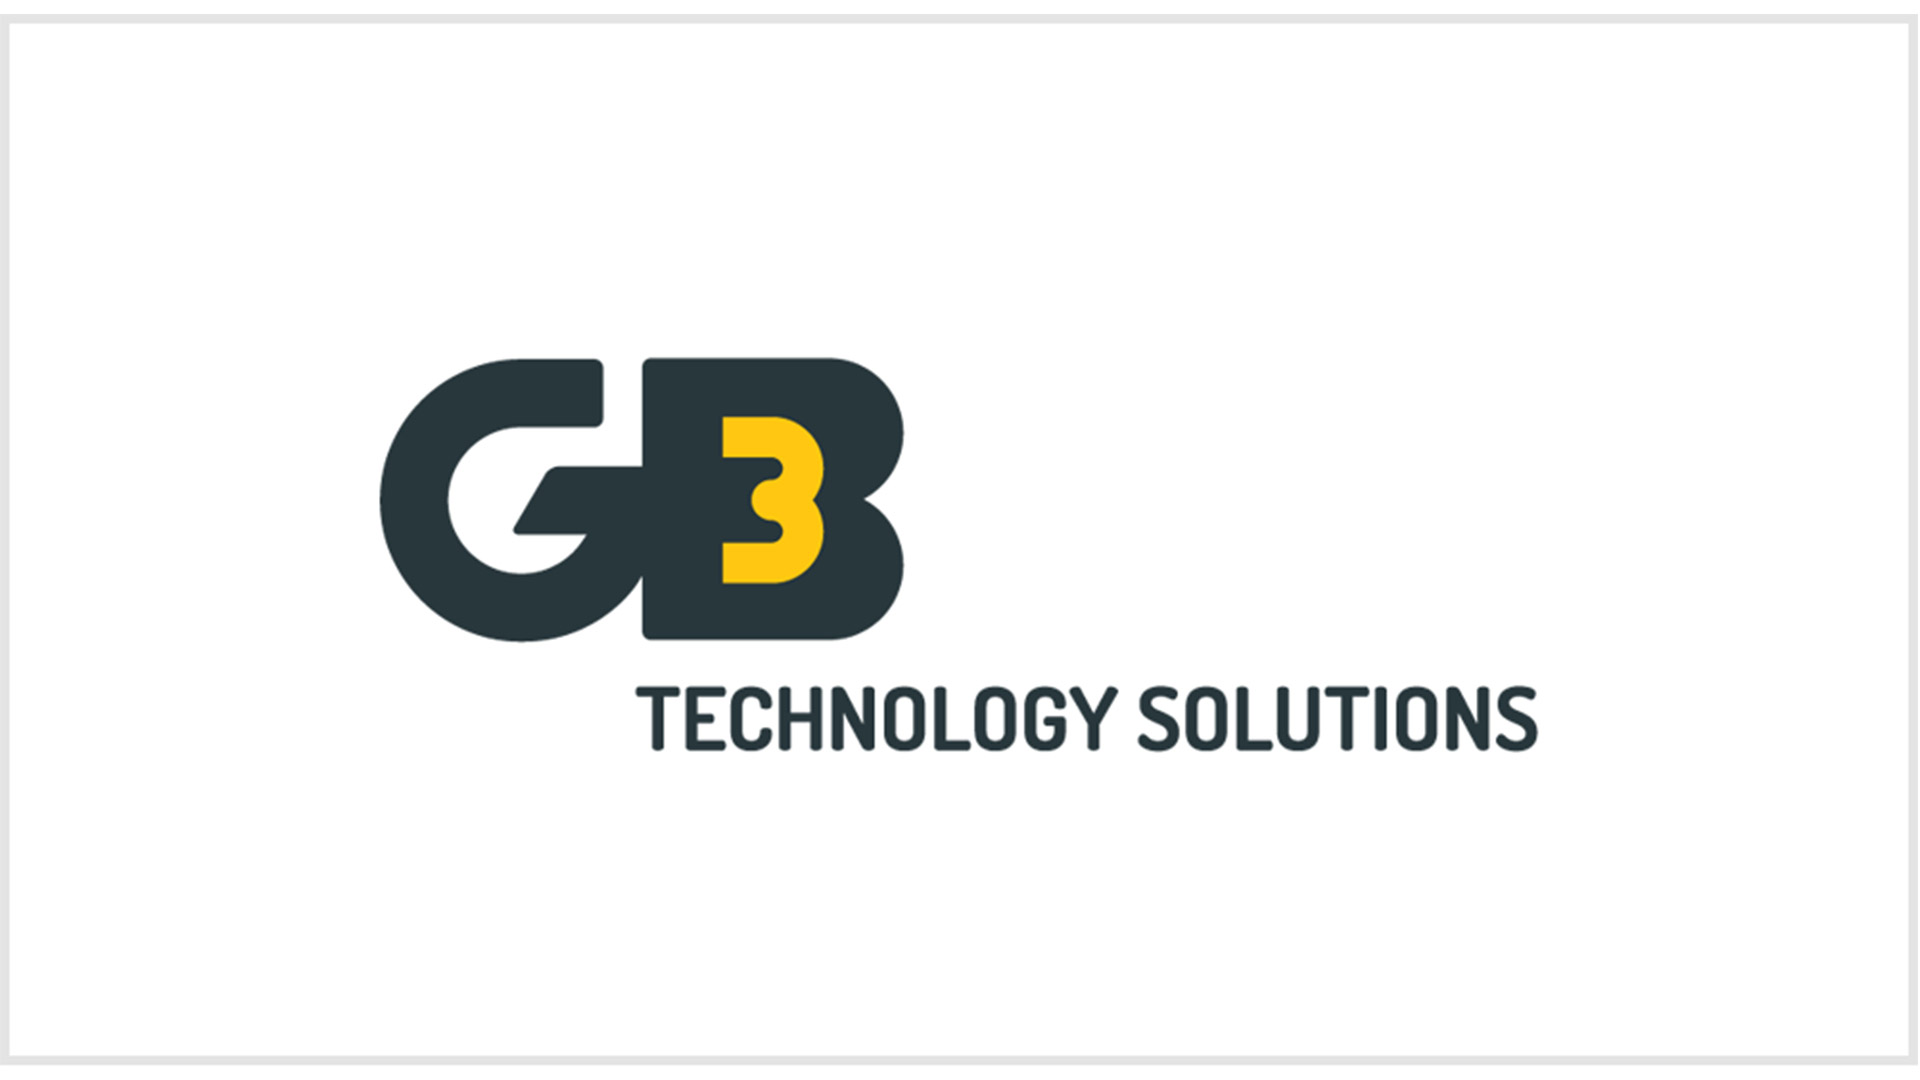 GB3 business logo